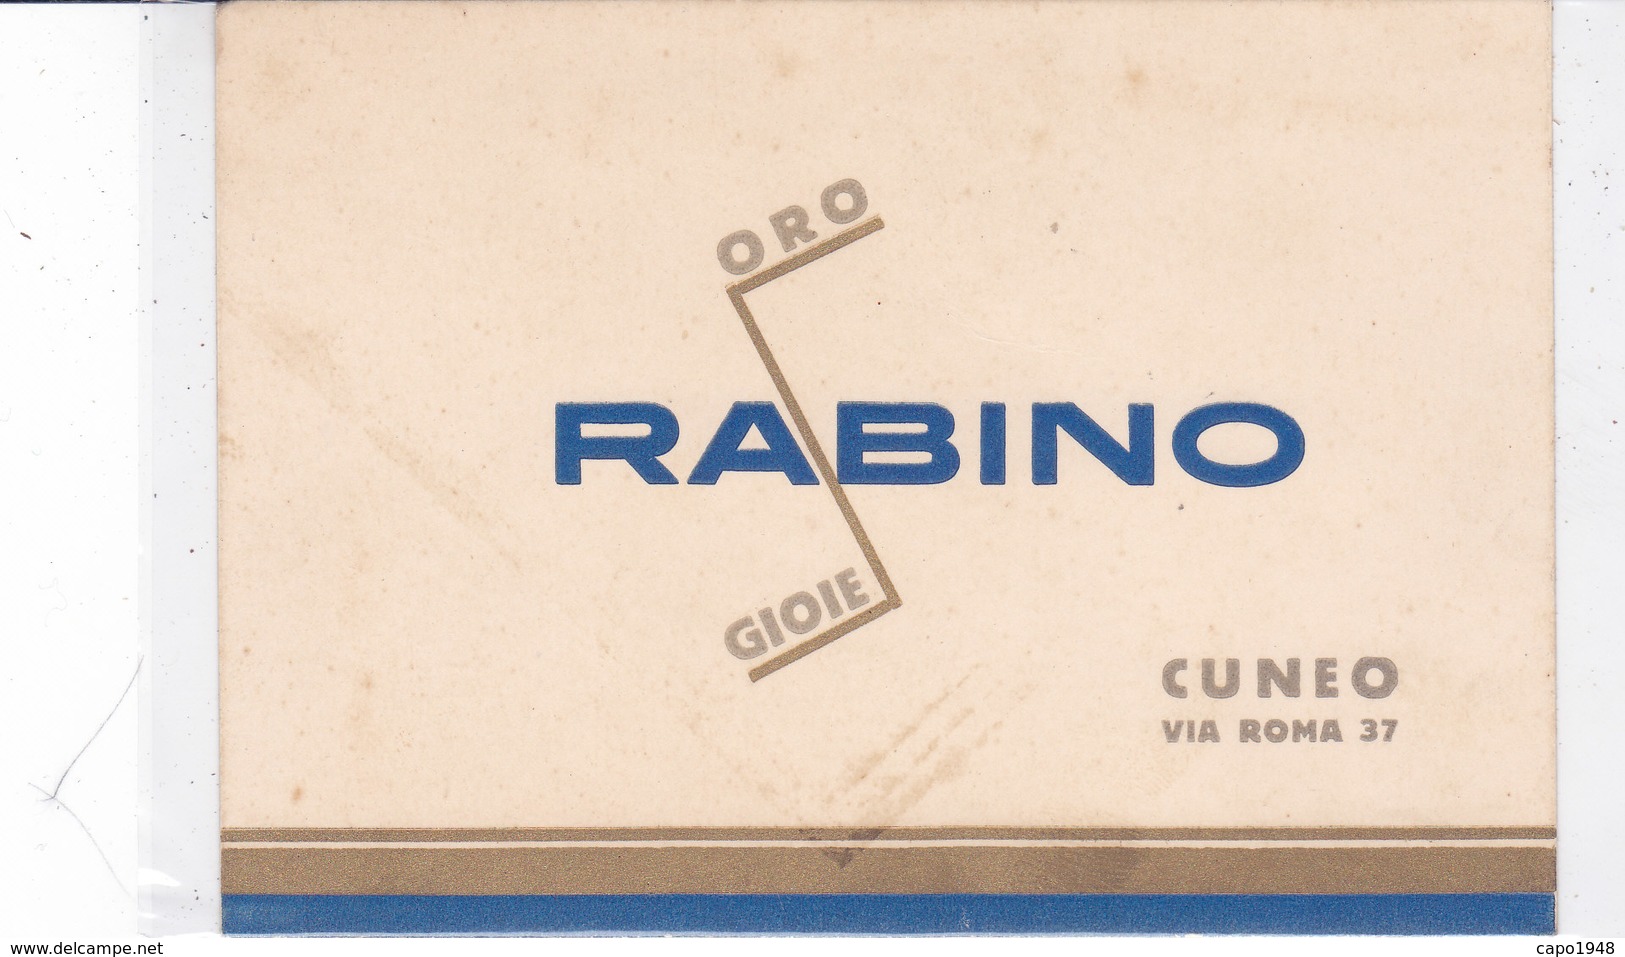 CARD CUNEO CARTONCINO PUBBLICITARIO STILE FUTURISTA RABINO ORO GIOIE  2 SCAN --2-0882-27054-55 - Cuneo